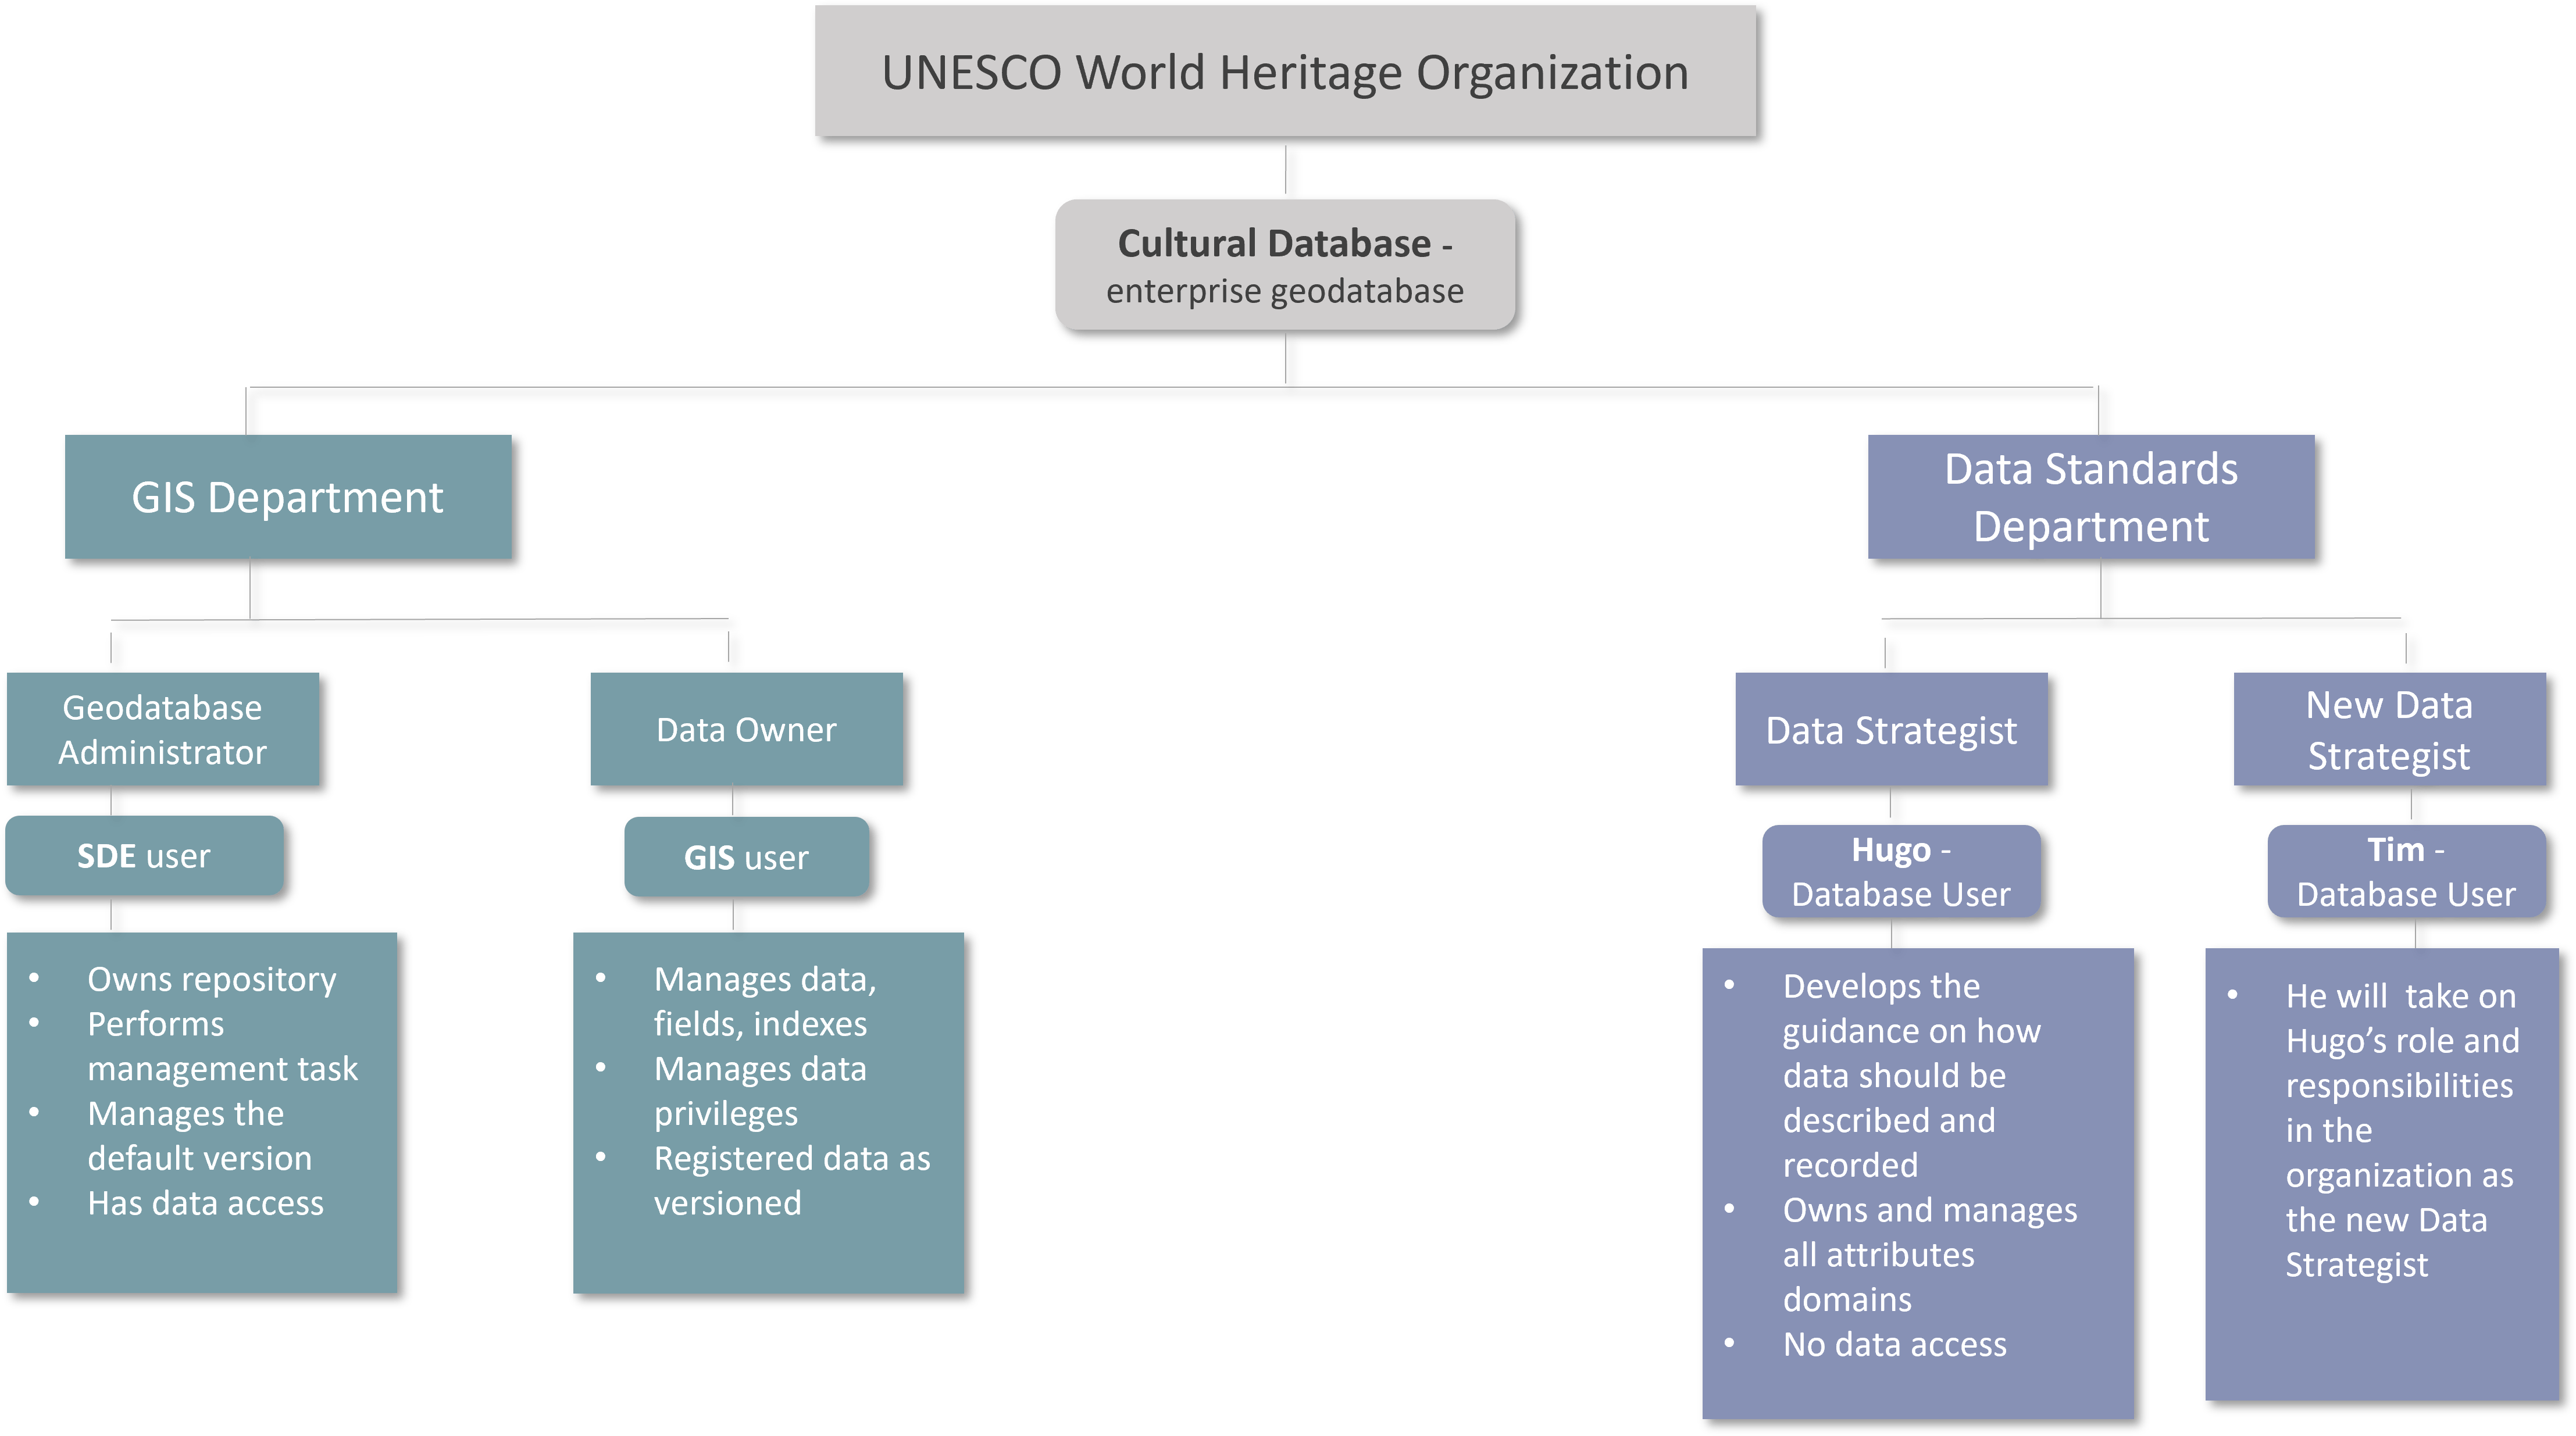 UNESCO Organization - Structure